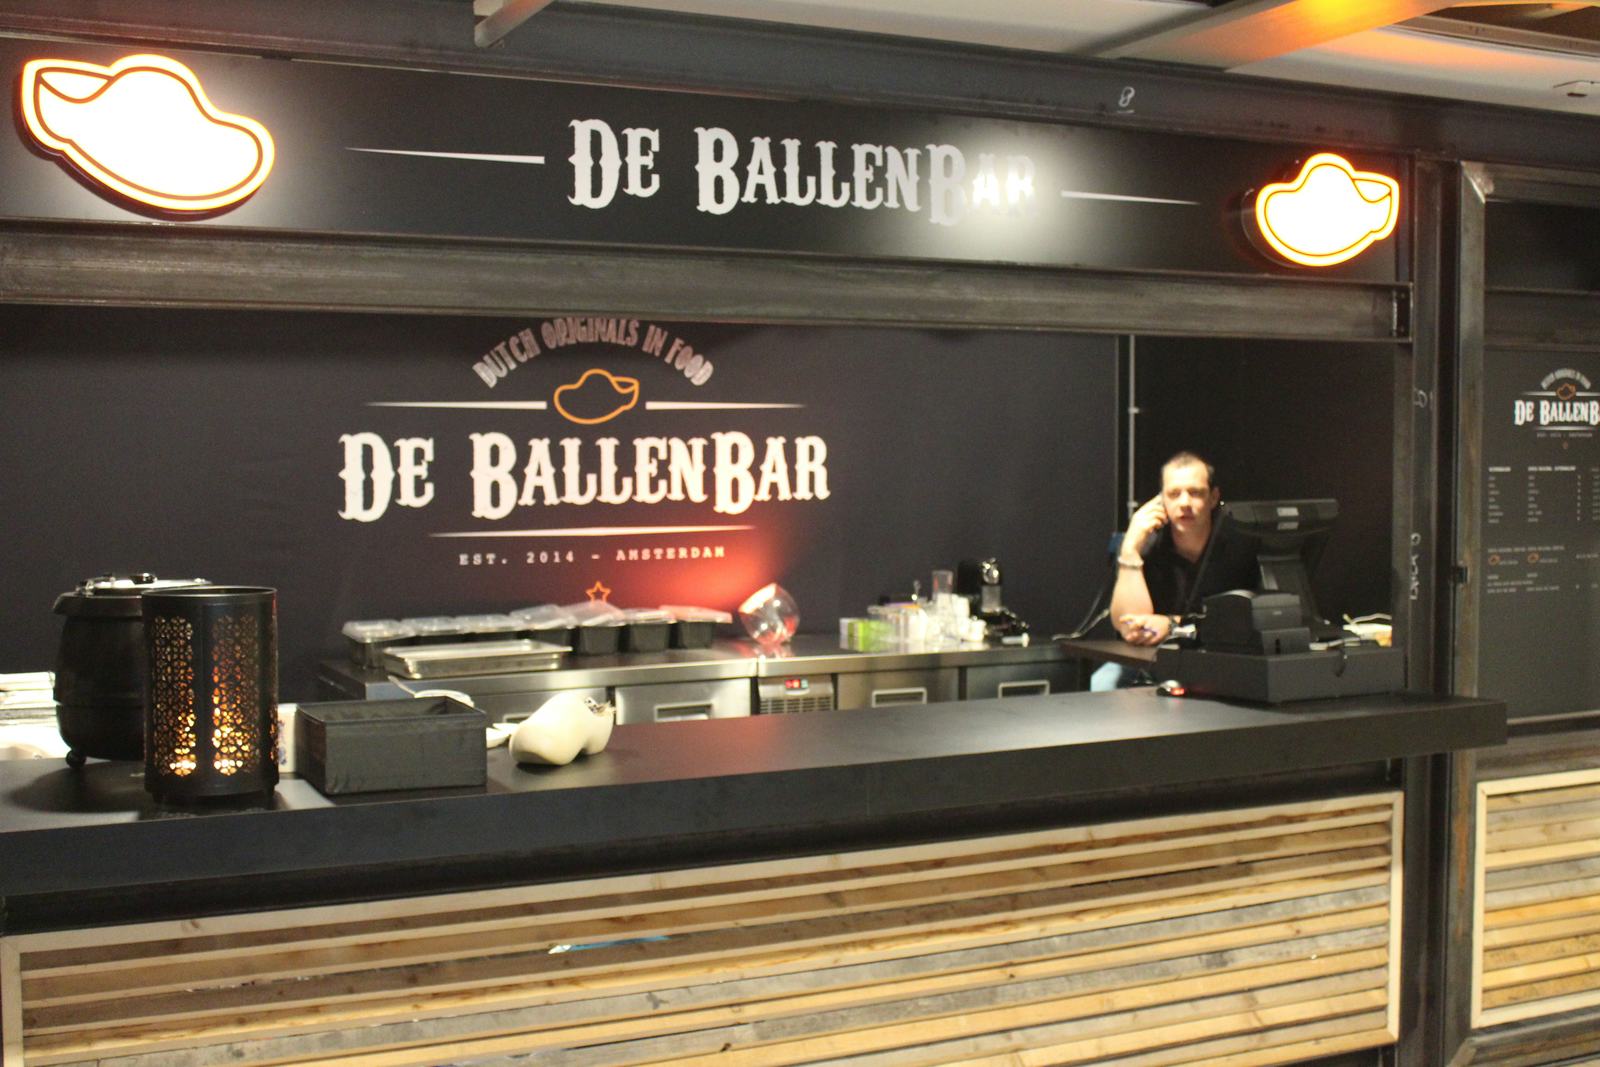 Video: Ballenbar in Foodhallen Amsterdam